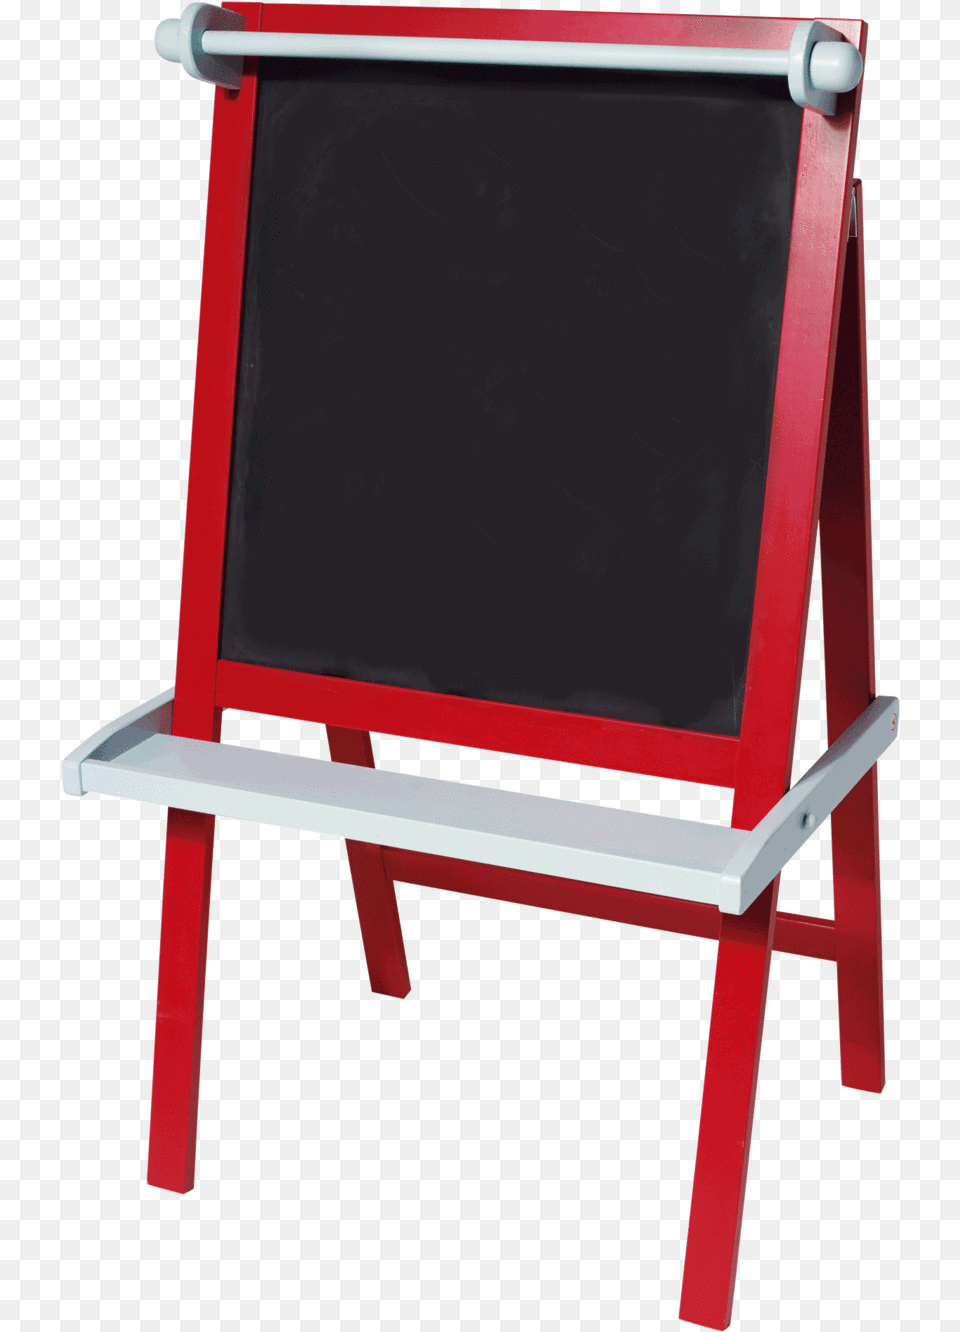 Gltc Art Easel Red Gltc Art Easel Red, Blackboard, Mailbox Png Image